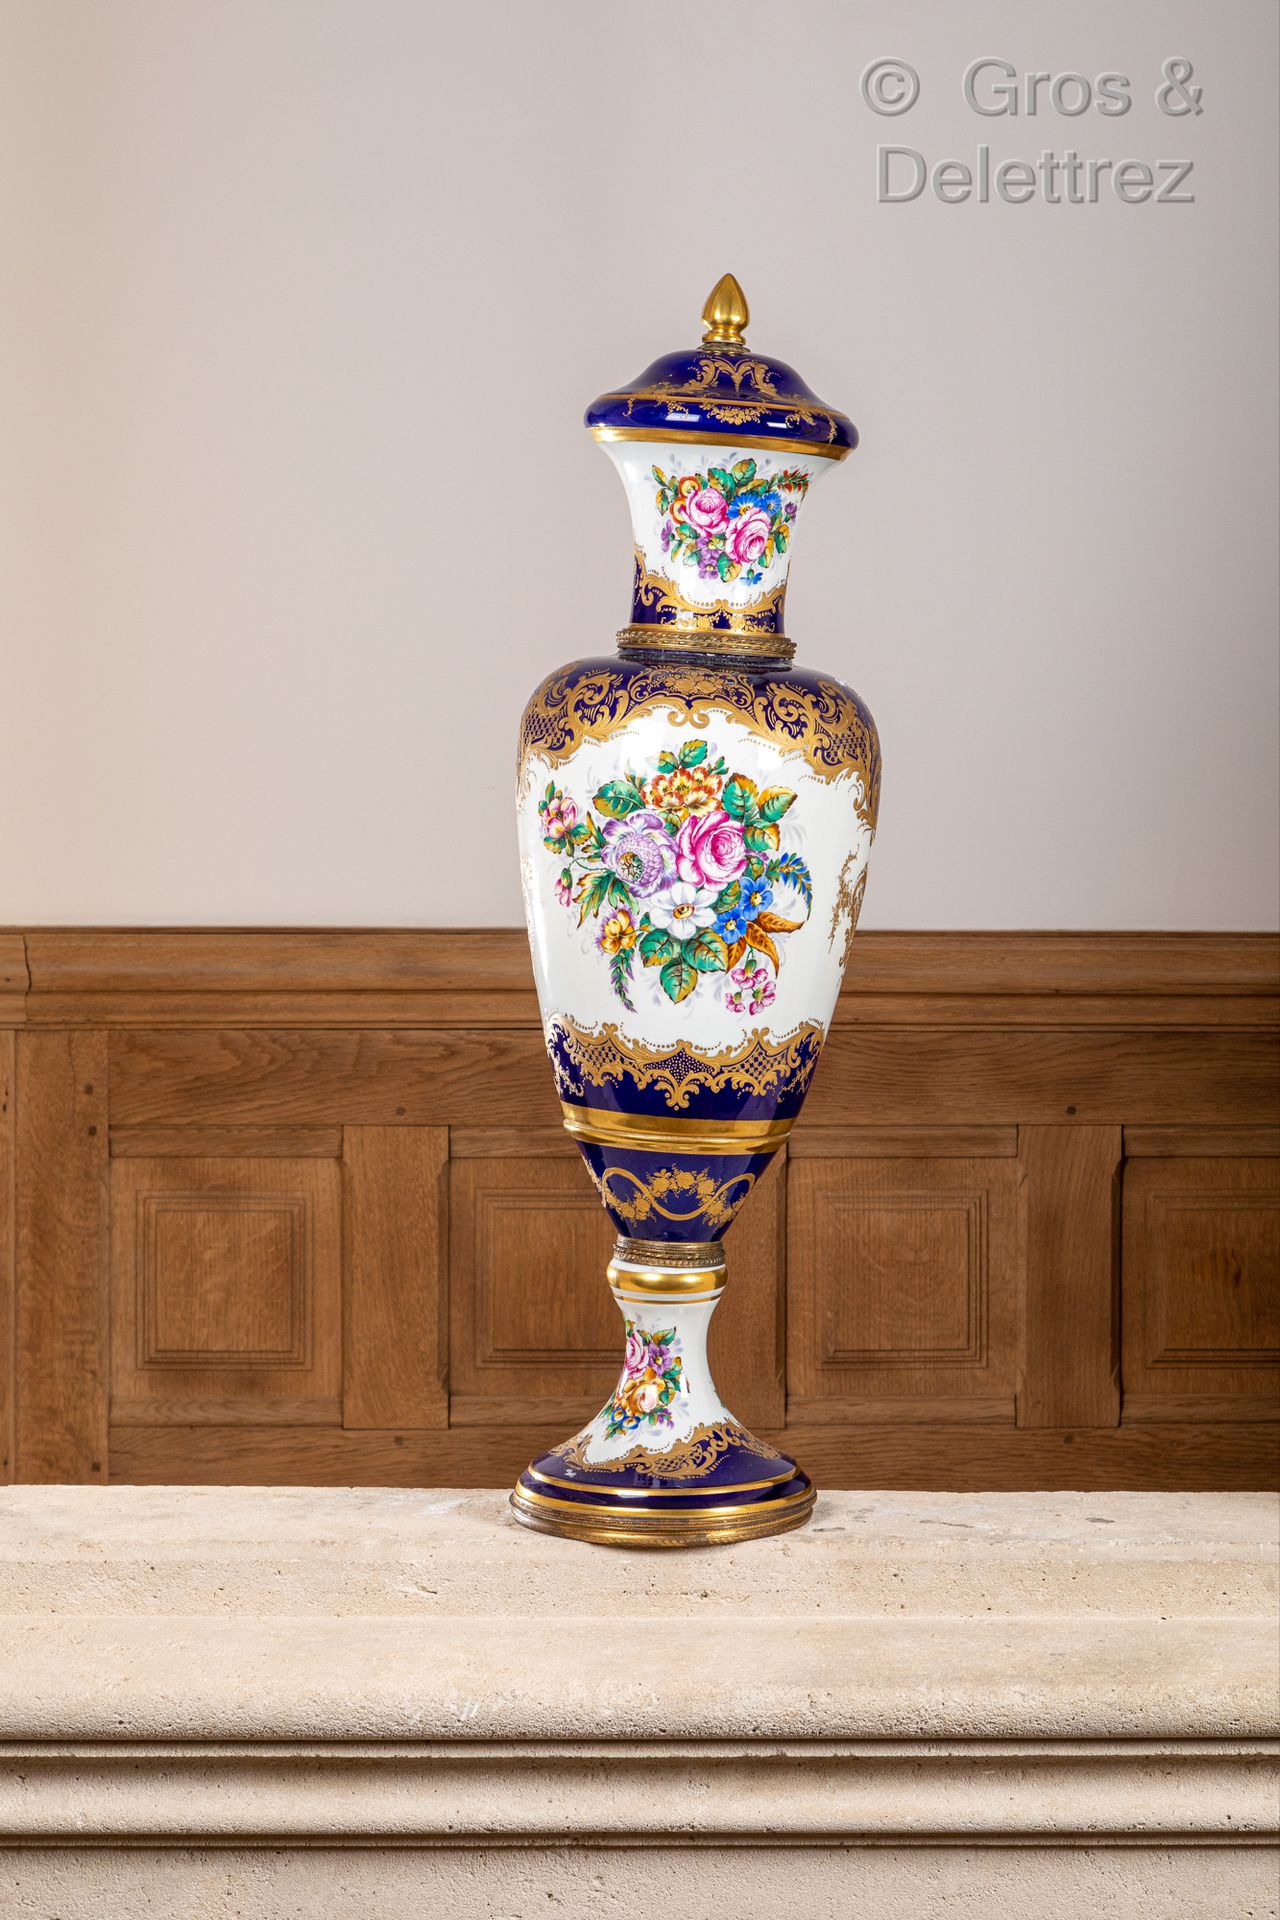 Null 阳台形式的大型有盖瓷瓶，蓝色背景上的刺绣卷轴和镀金罗盖尔周围有花束的多色装饰。

高度：90厘米